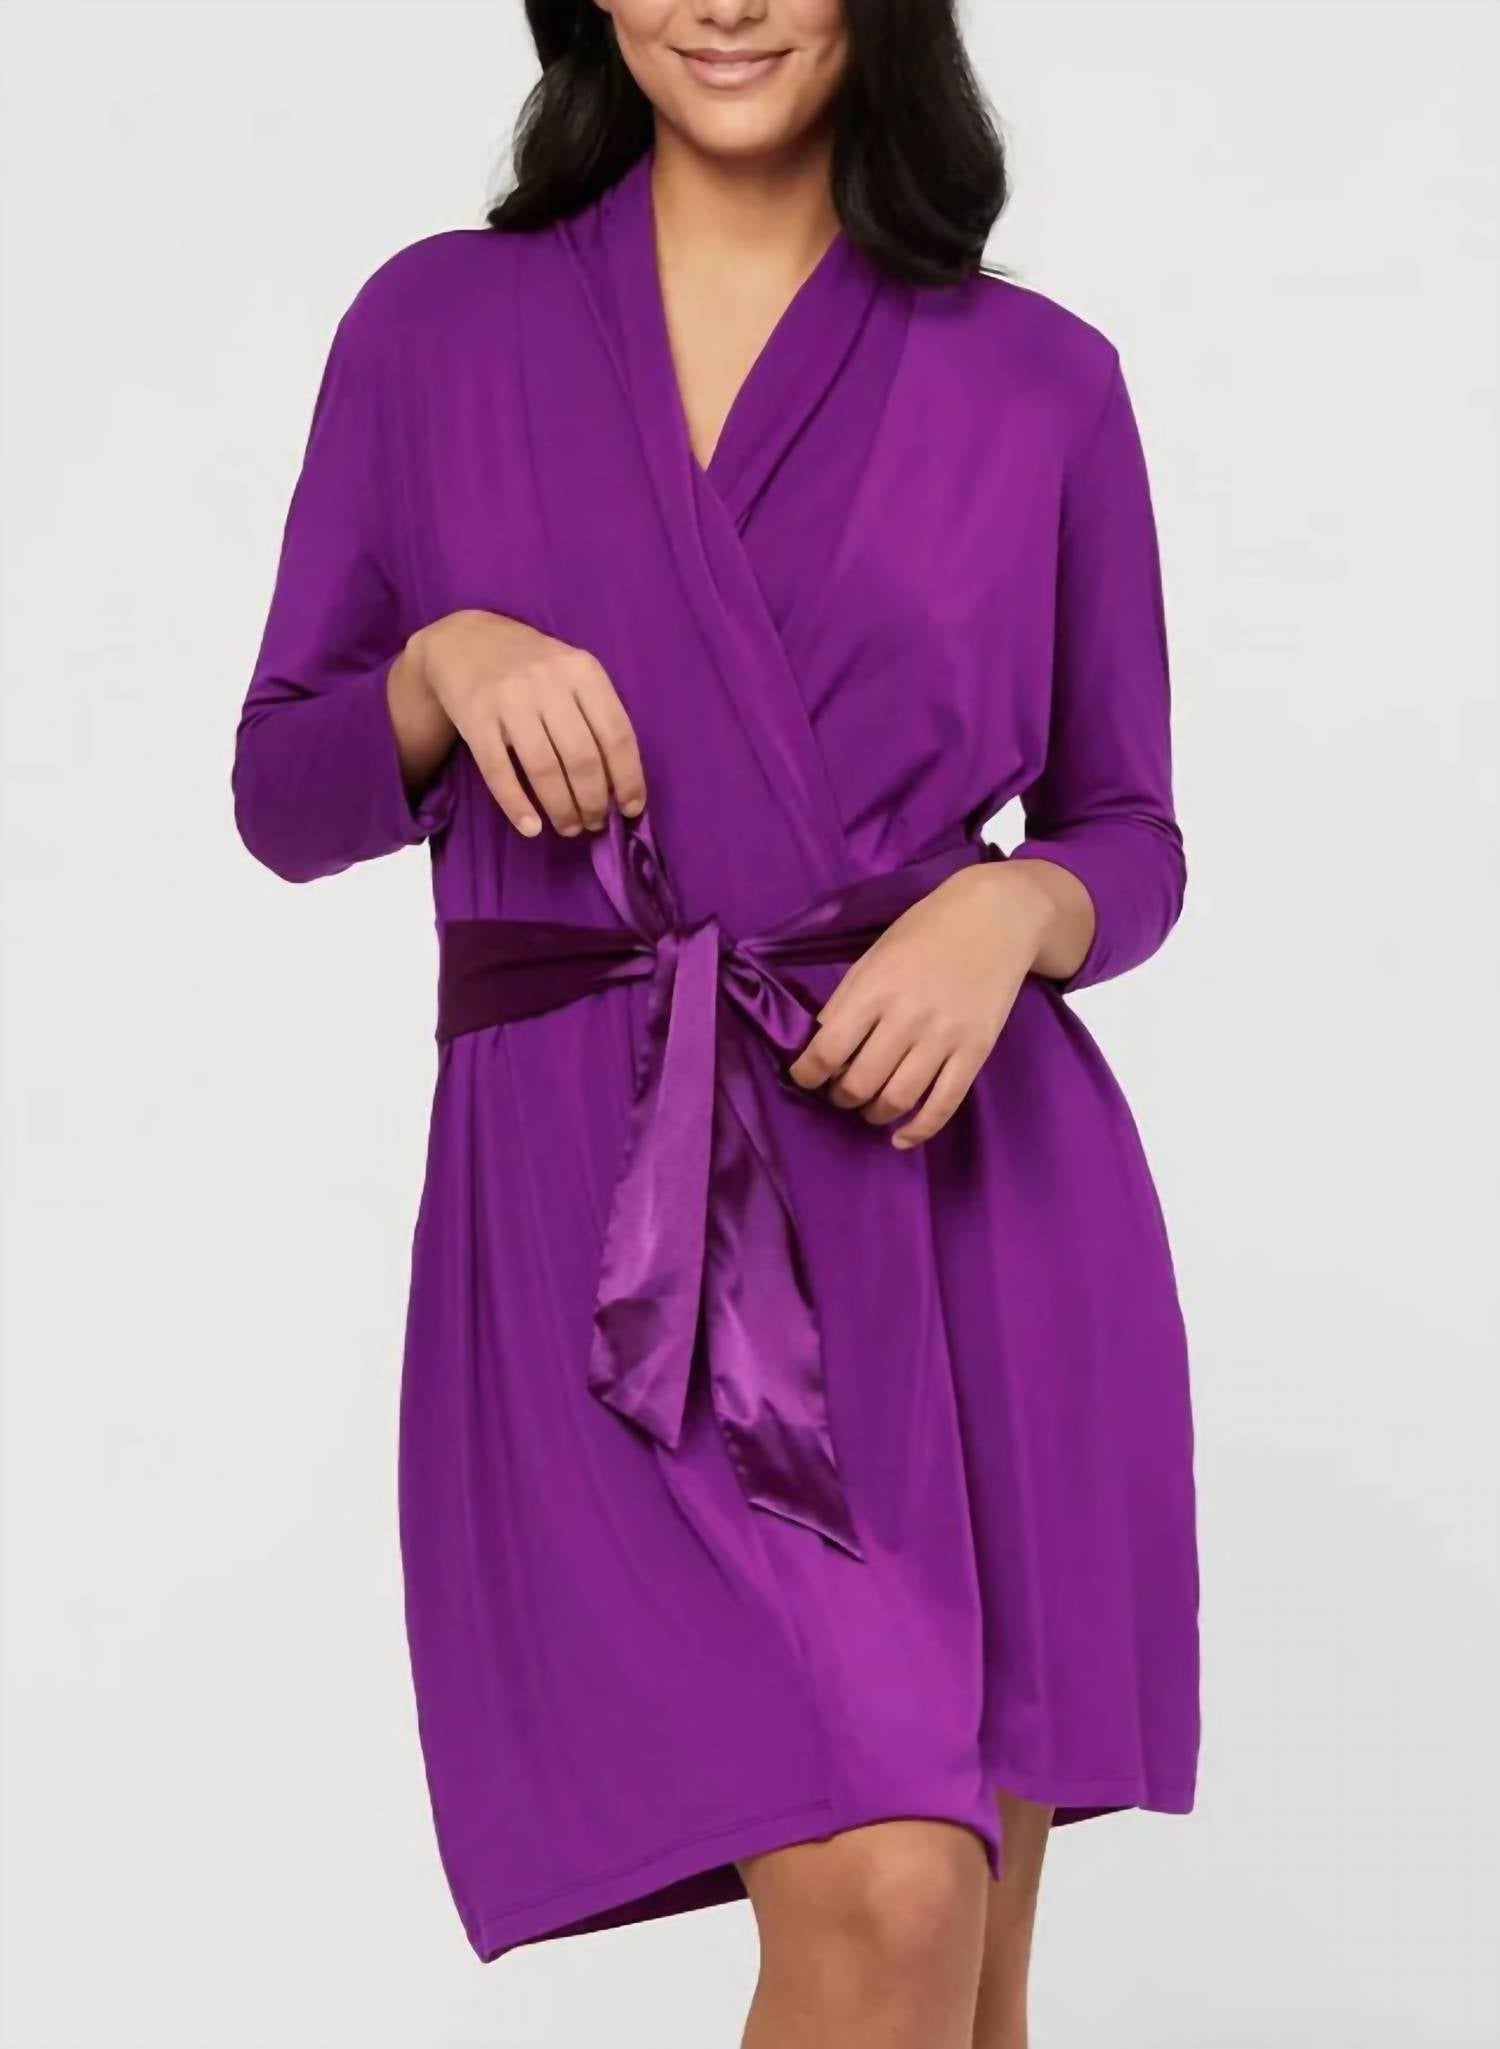 FLEUR'T Iconic	Robe With Silk Tie in Dahlia Purple